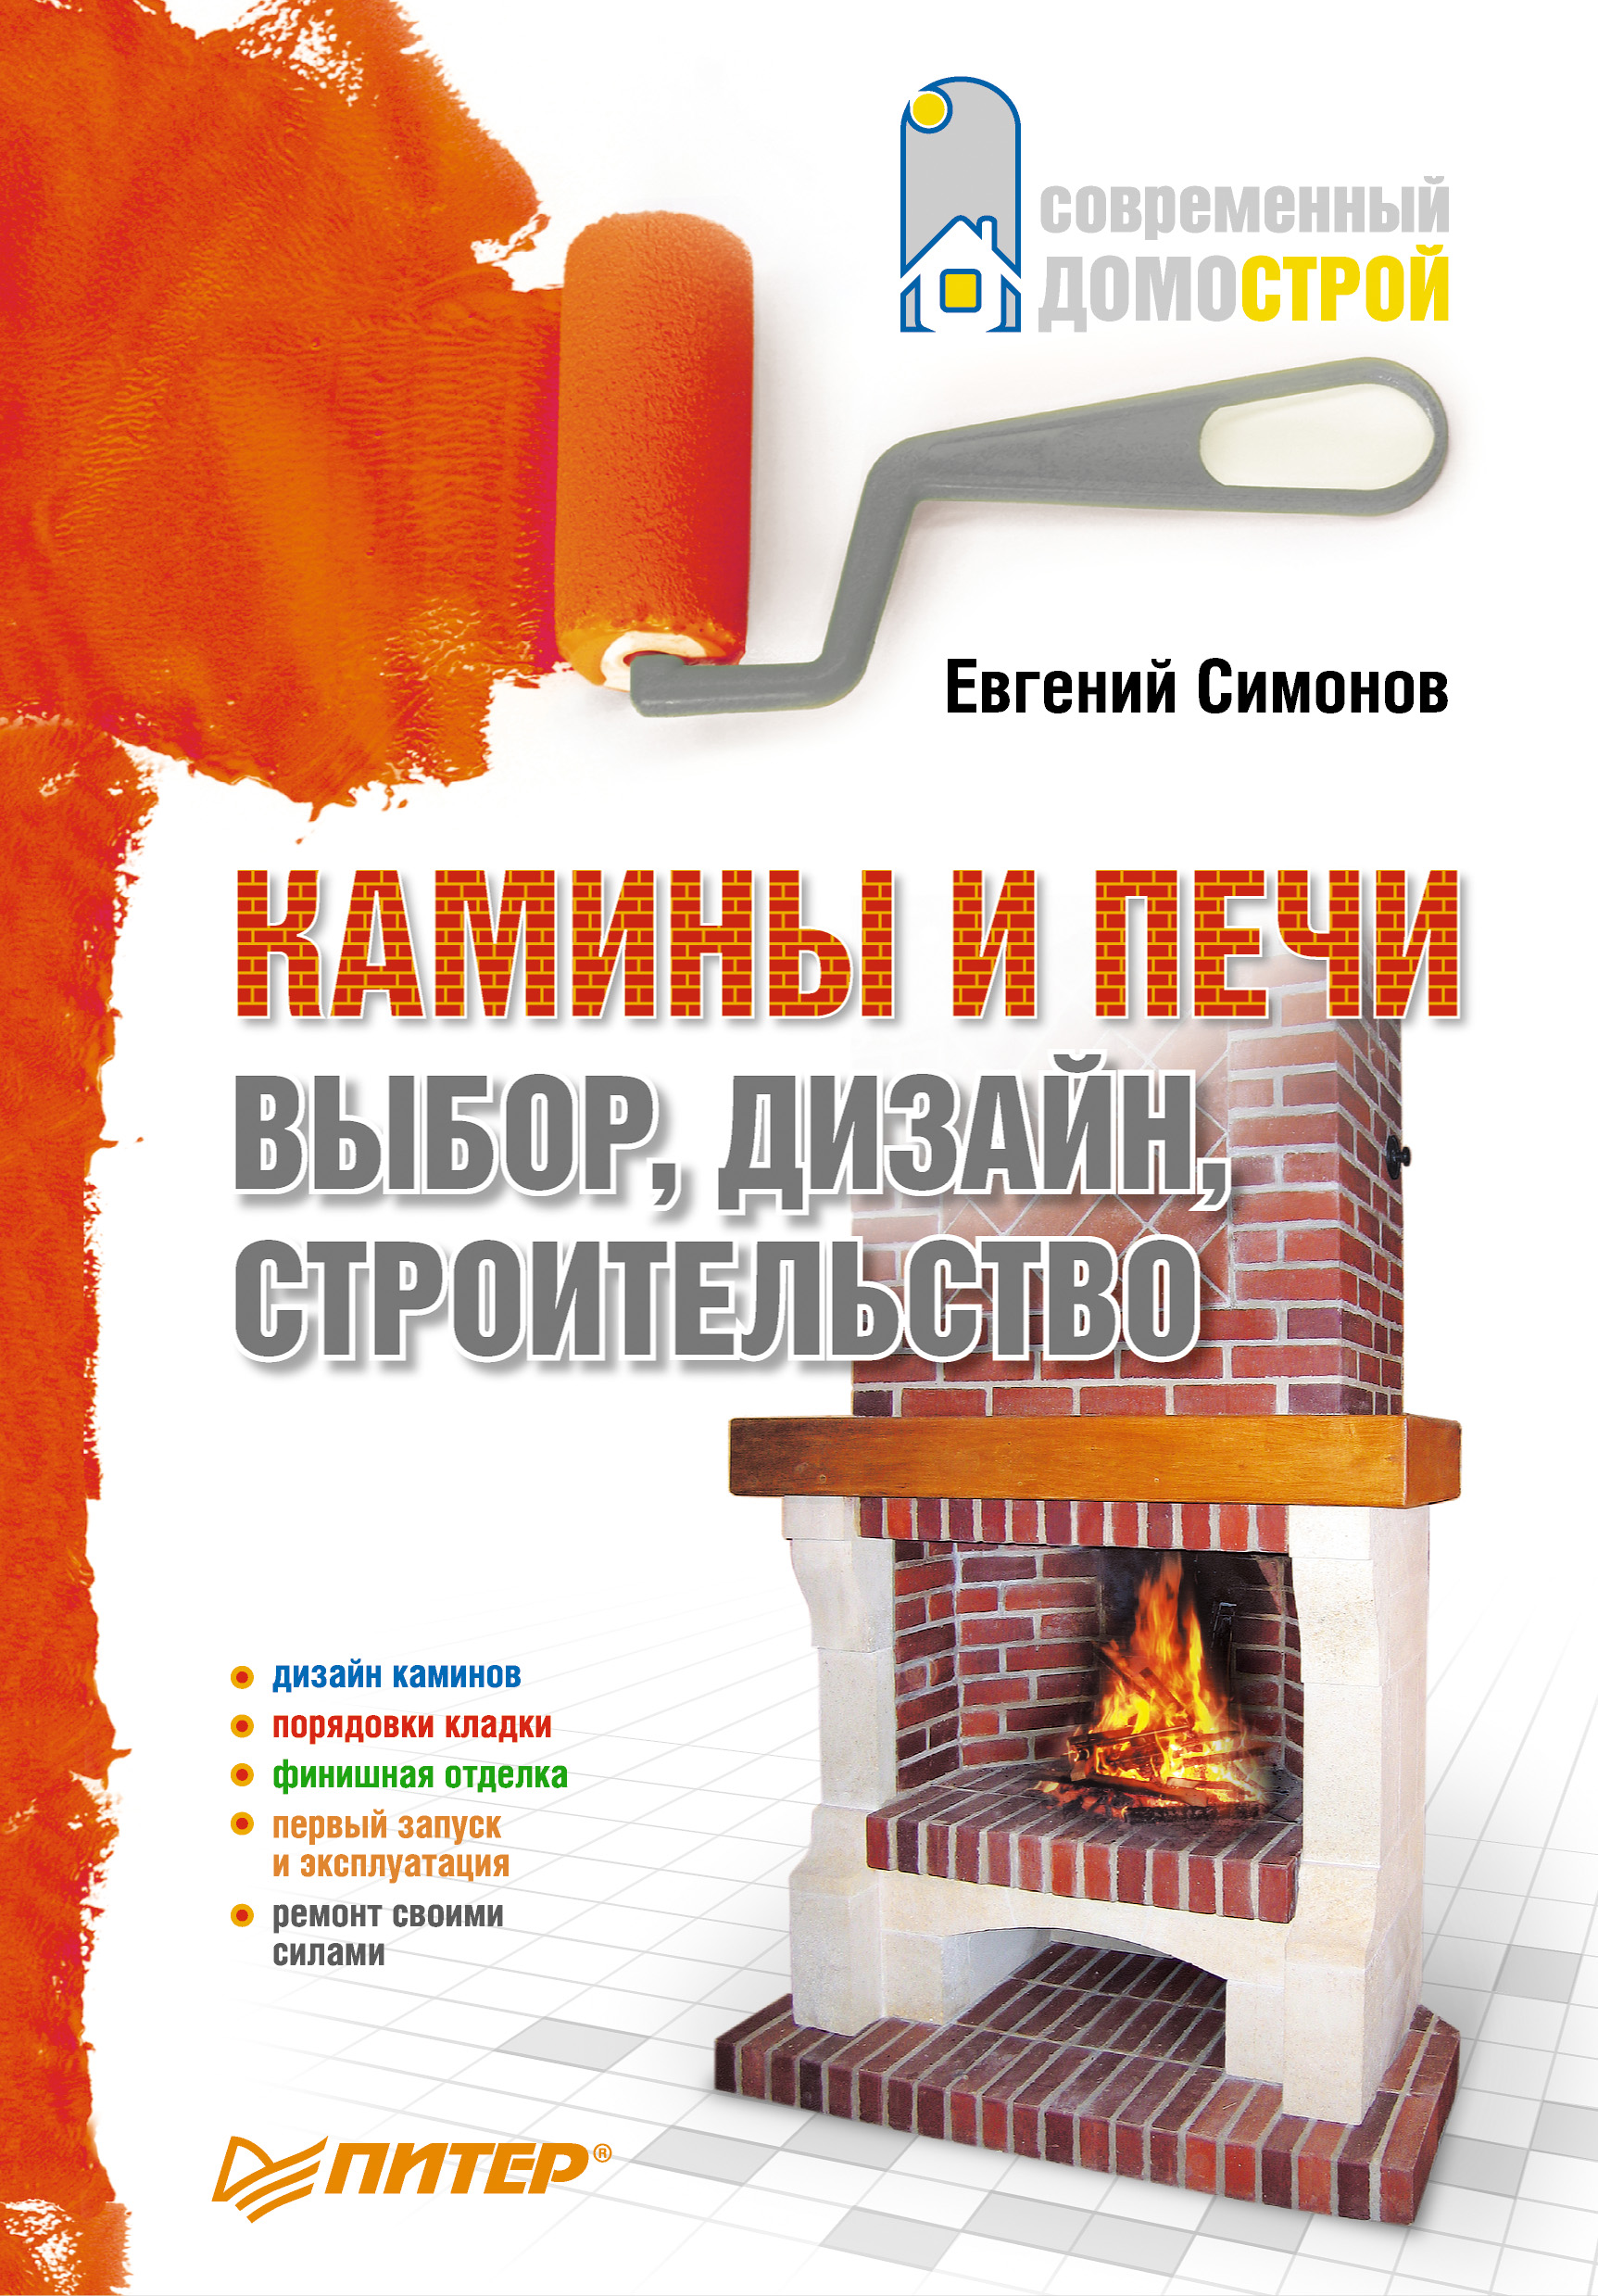 Печь-камин Contura 35T: видео, обзор, характеристики - интернет-магазин aikimaster.ru